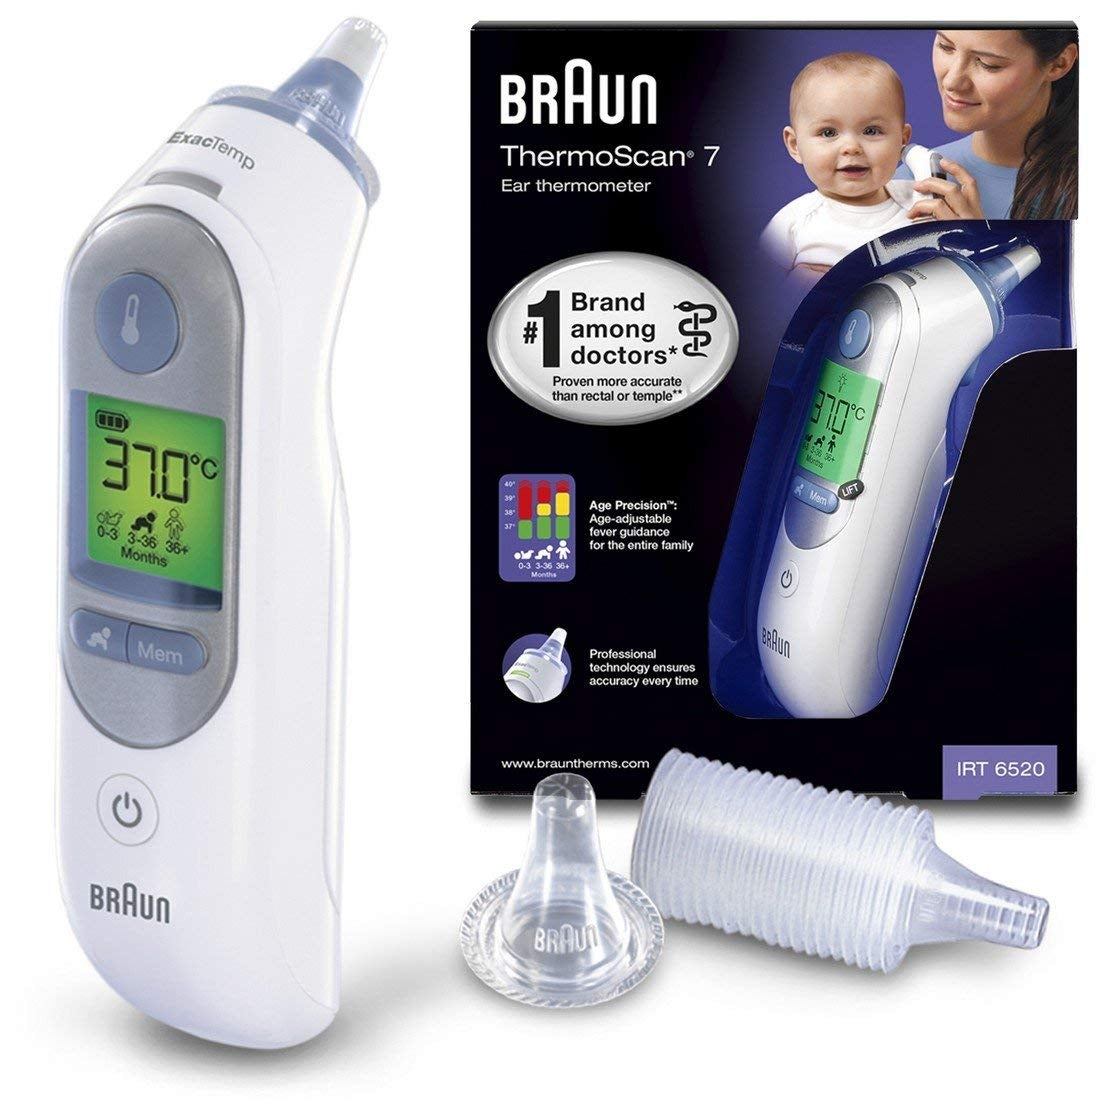 Braun Ear Thermometer Braun ThermoScan 7 - Age Precision